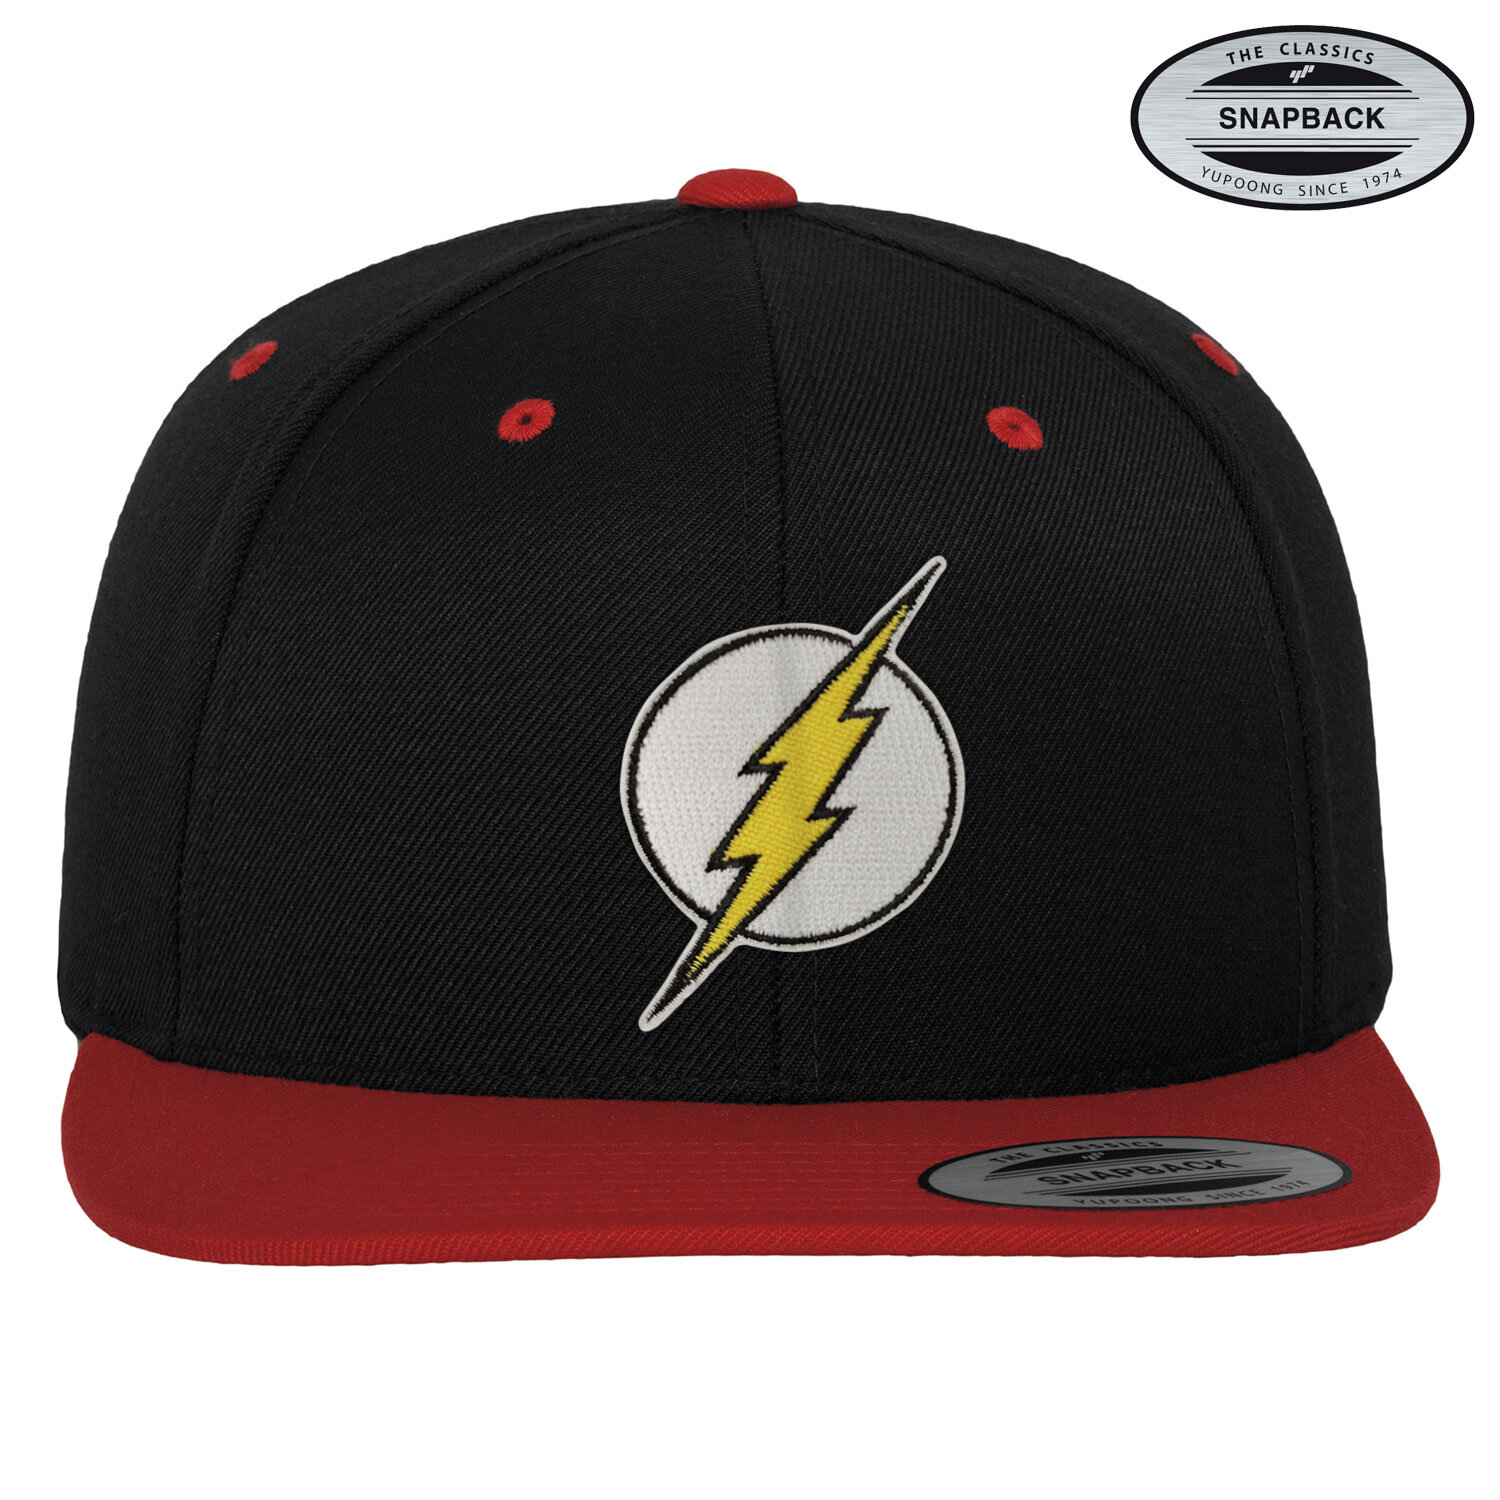 Cap Premium Snapback The Shirtstore Flash -